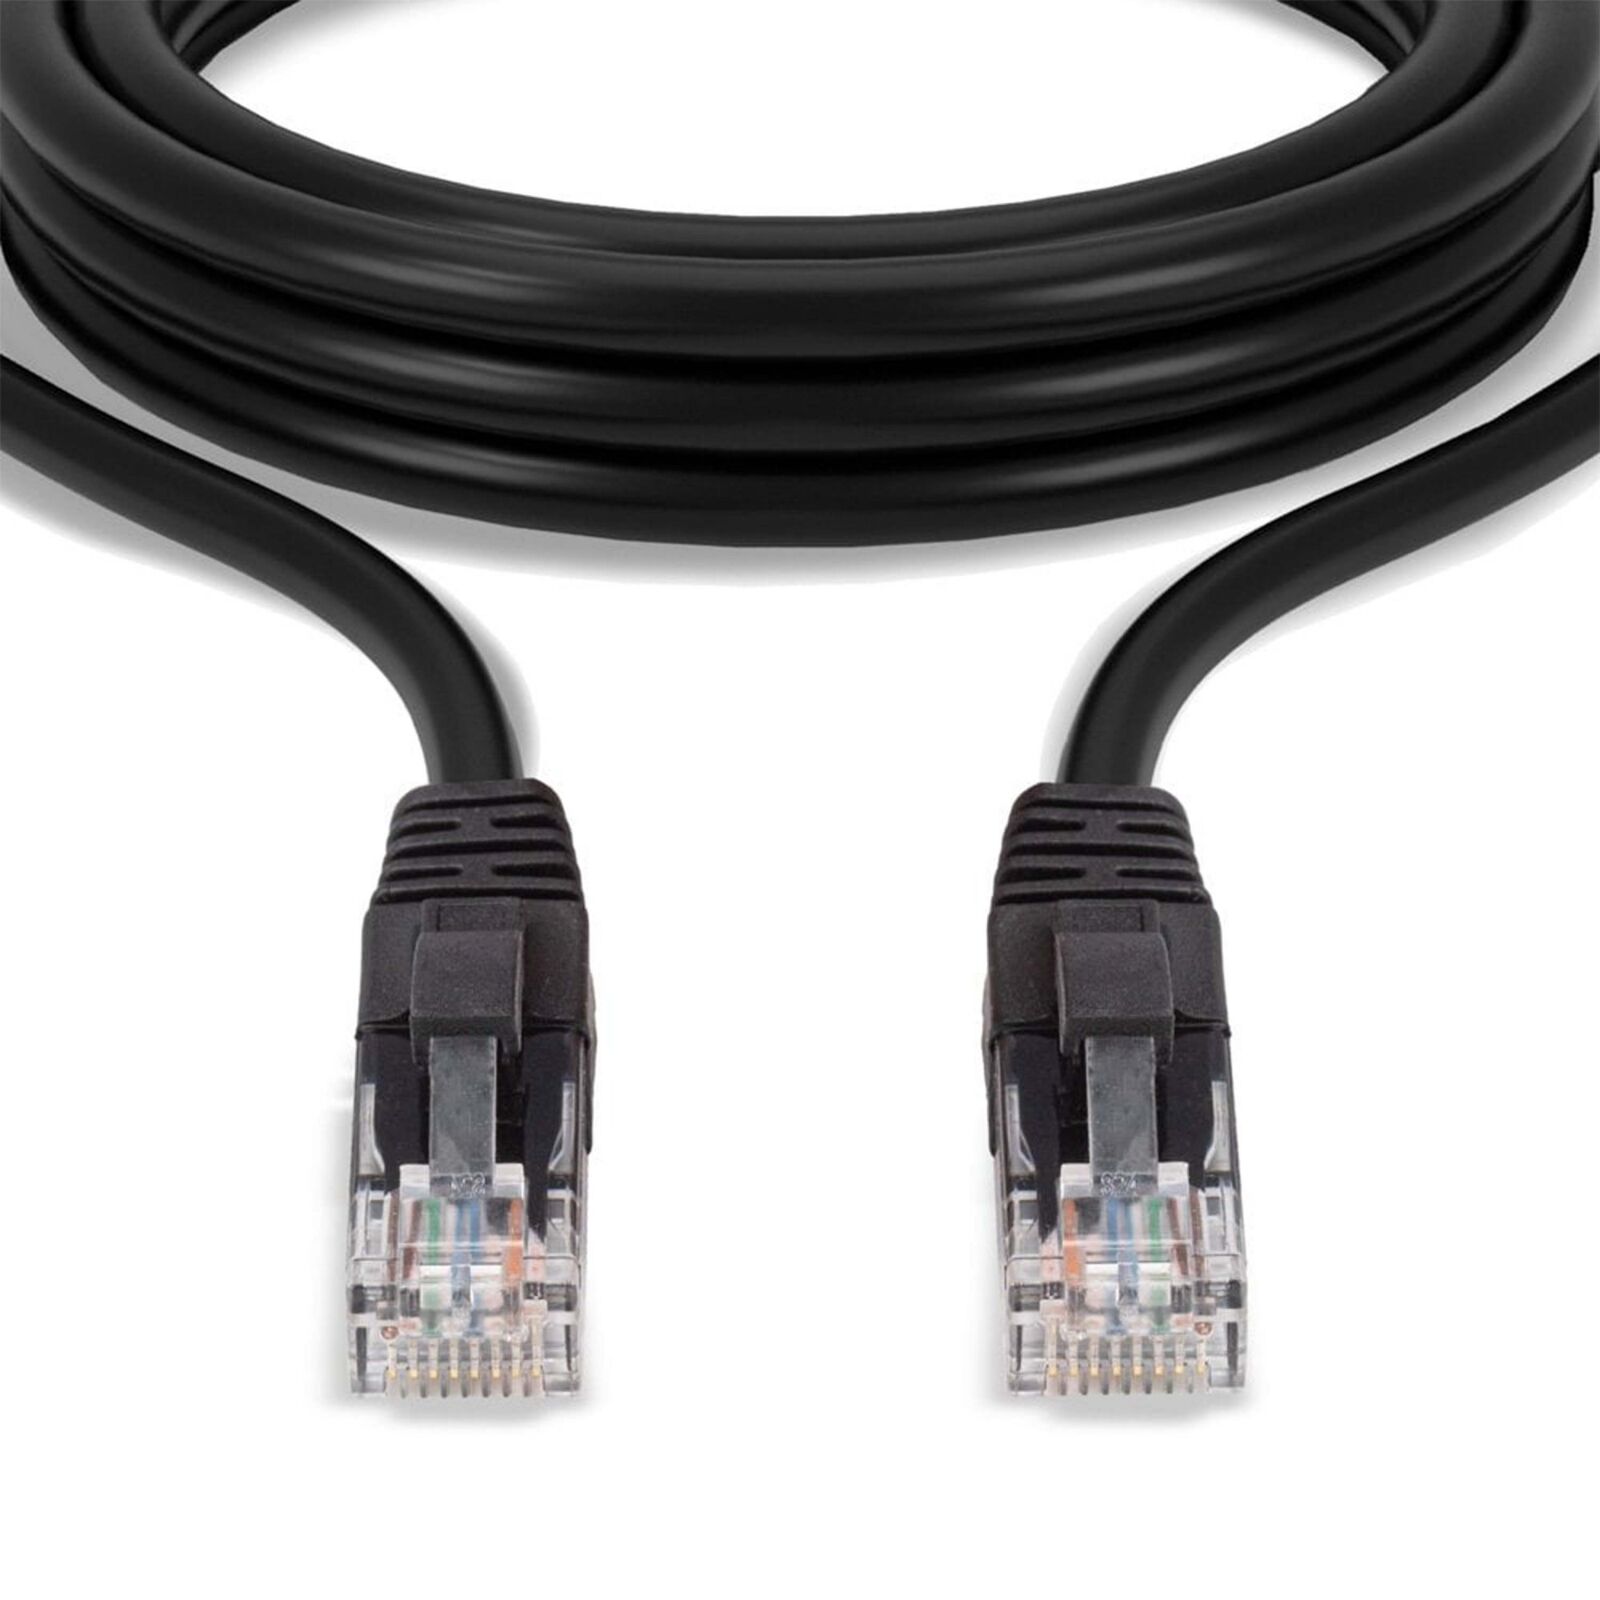 CABLE LAN ETHERNET UTP RJ-45 NETWORK PATCH INTERNET BLACK 0 10/12ft 9 13/16in